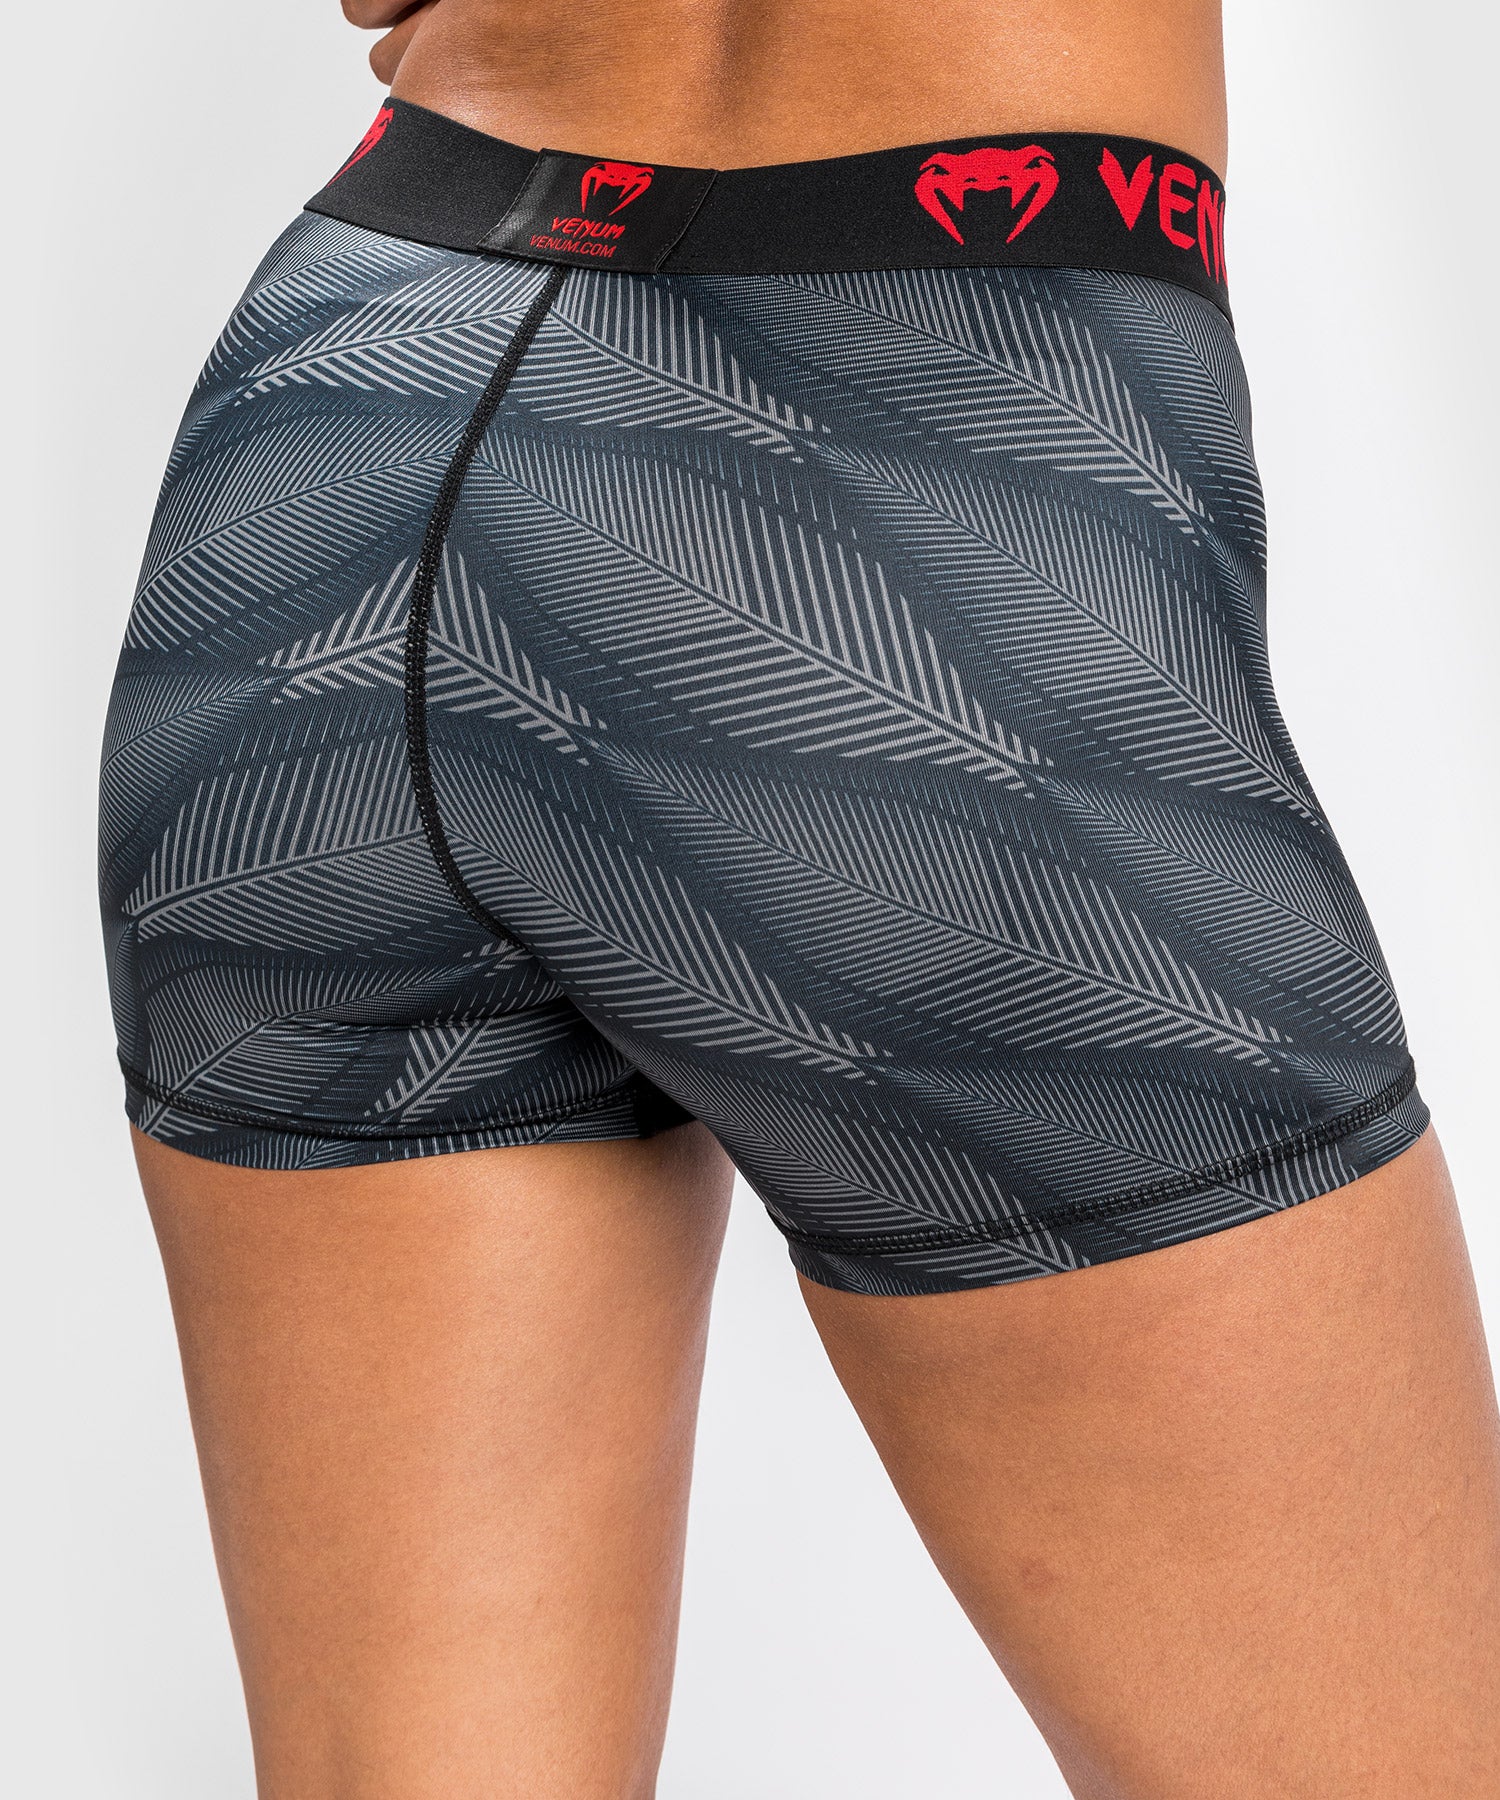 Venum Phantom Compression Shorts - For Women - Black/Red – Venum United  Kingdom